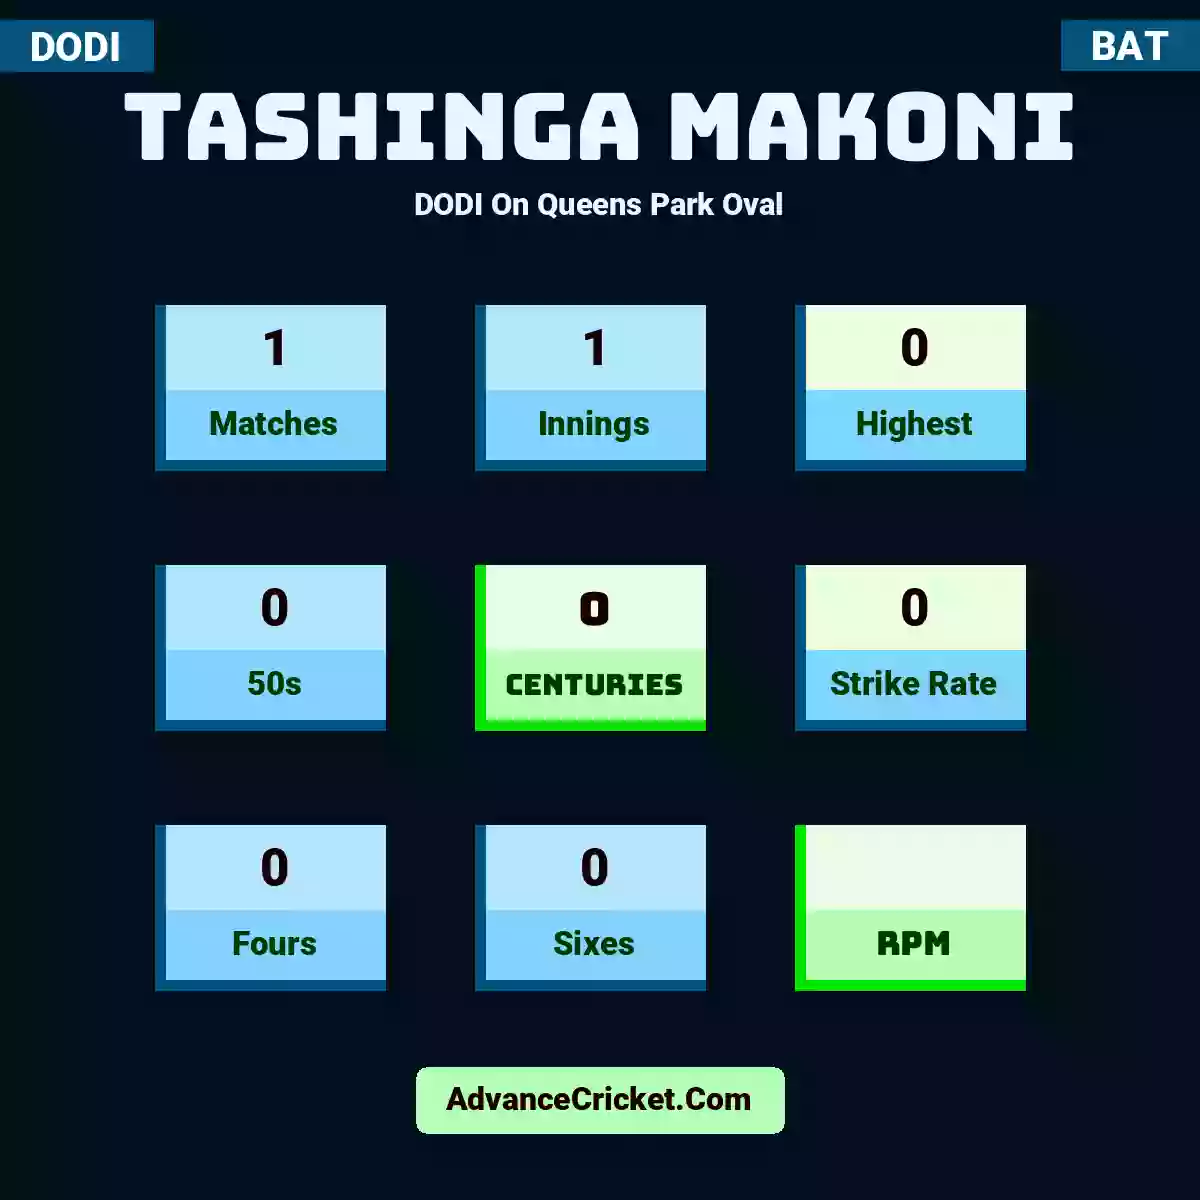 Tashinga Makoni DODI  On Queens Park Oval, Tashinga Makoni played 1 matches, scored 0 runs as highest, 0 half-centuries, and 0 centuries, with a strike rate of 0. T.Makoni hit 0 fours and 0 sixes.